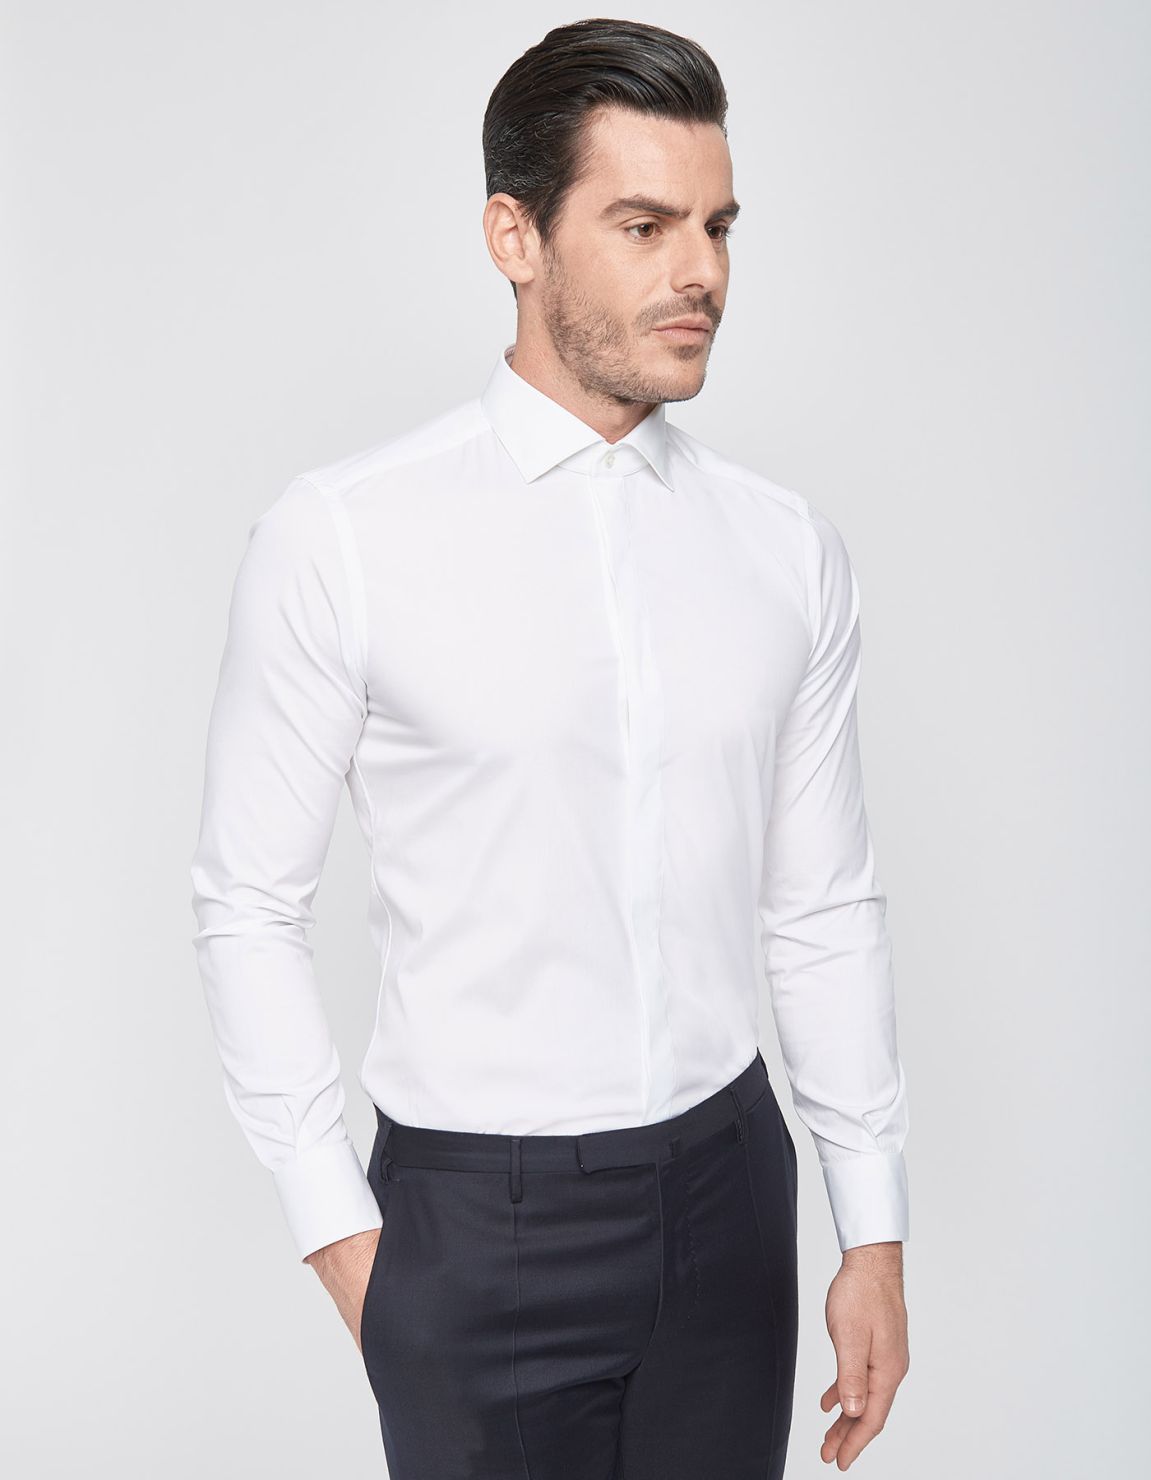 Shirt Collar cutaway White Canvas Slim Fit 1